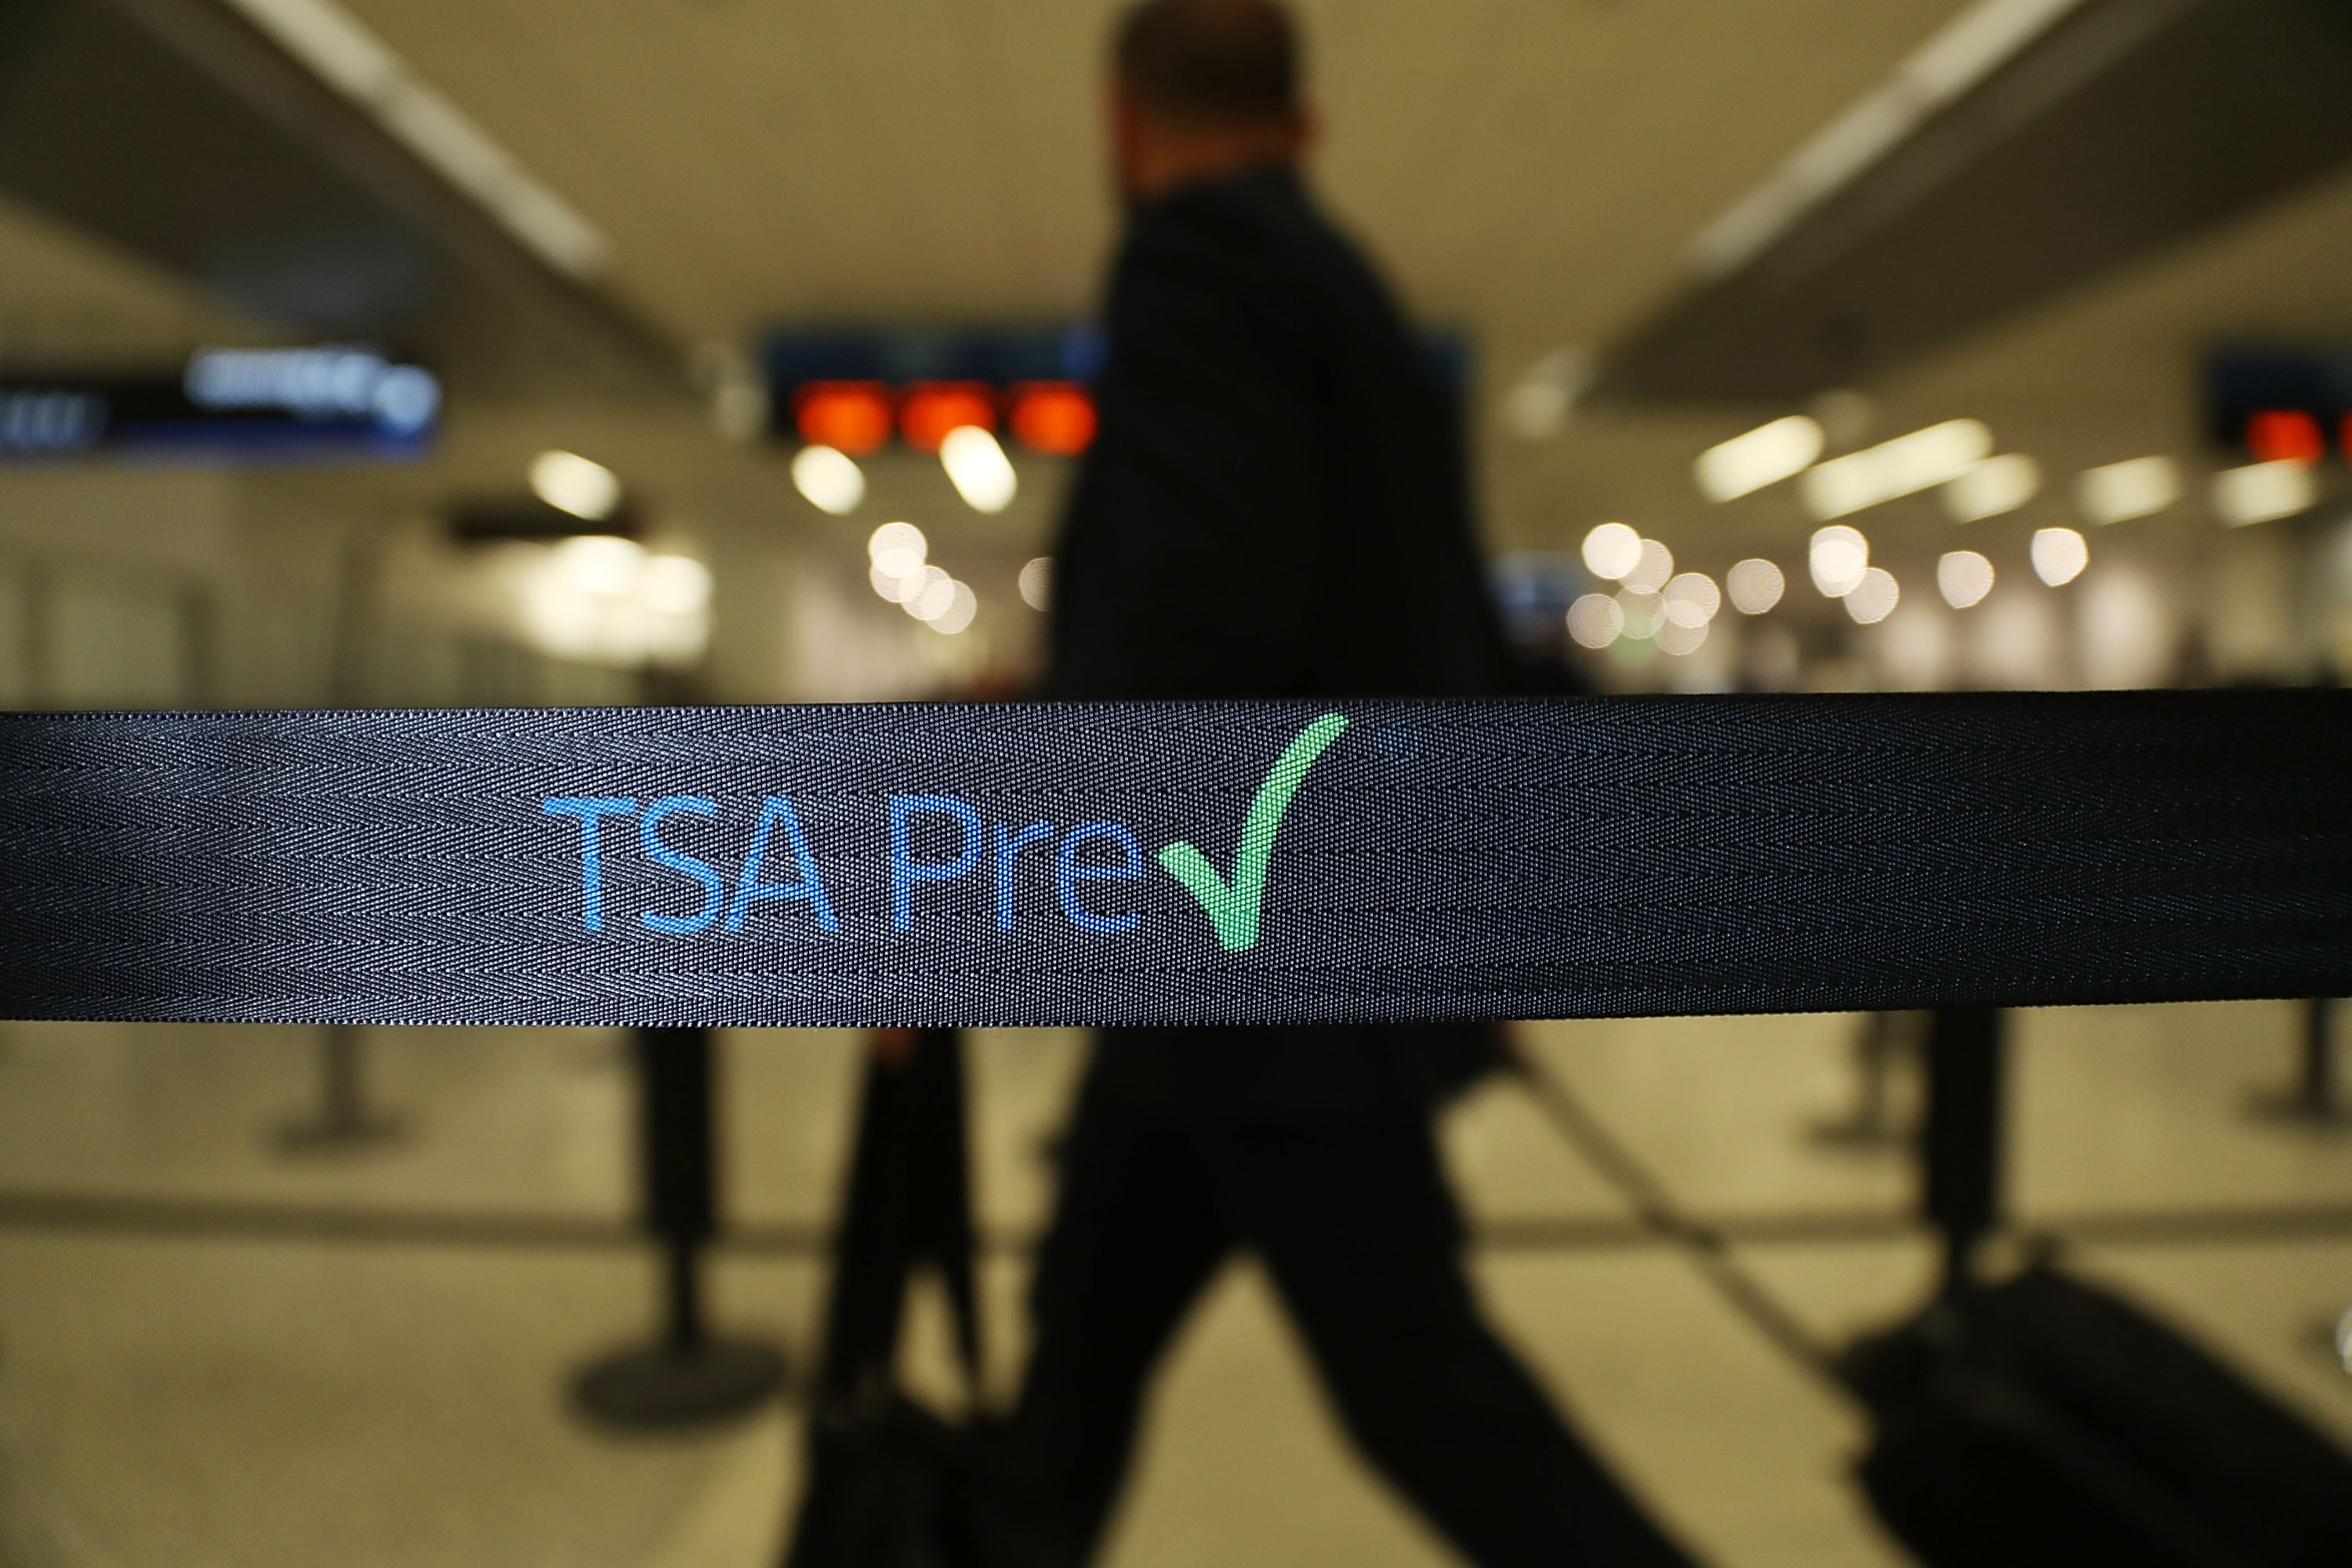 Reasons to get TSA PreCheck right now